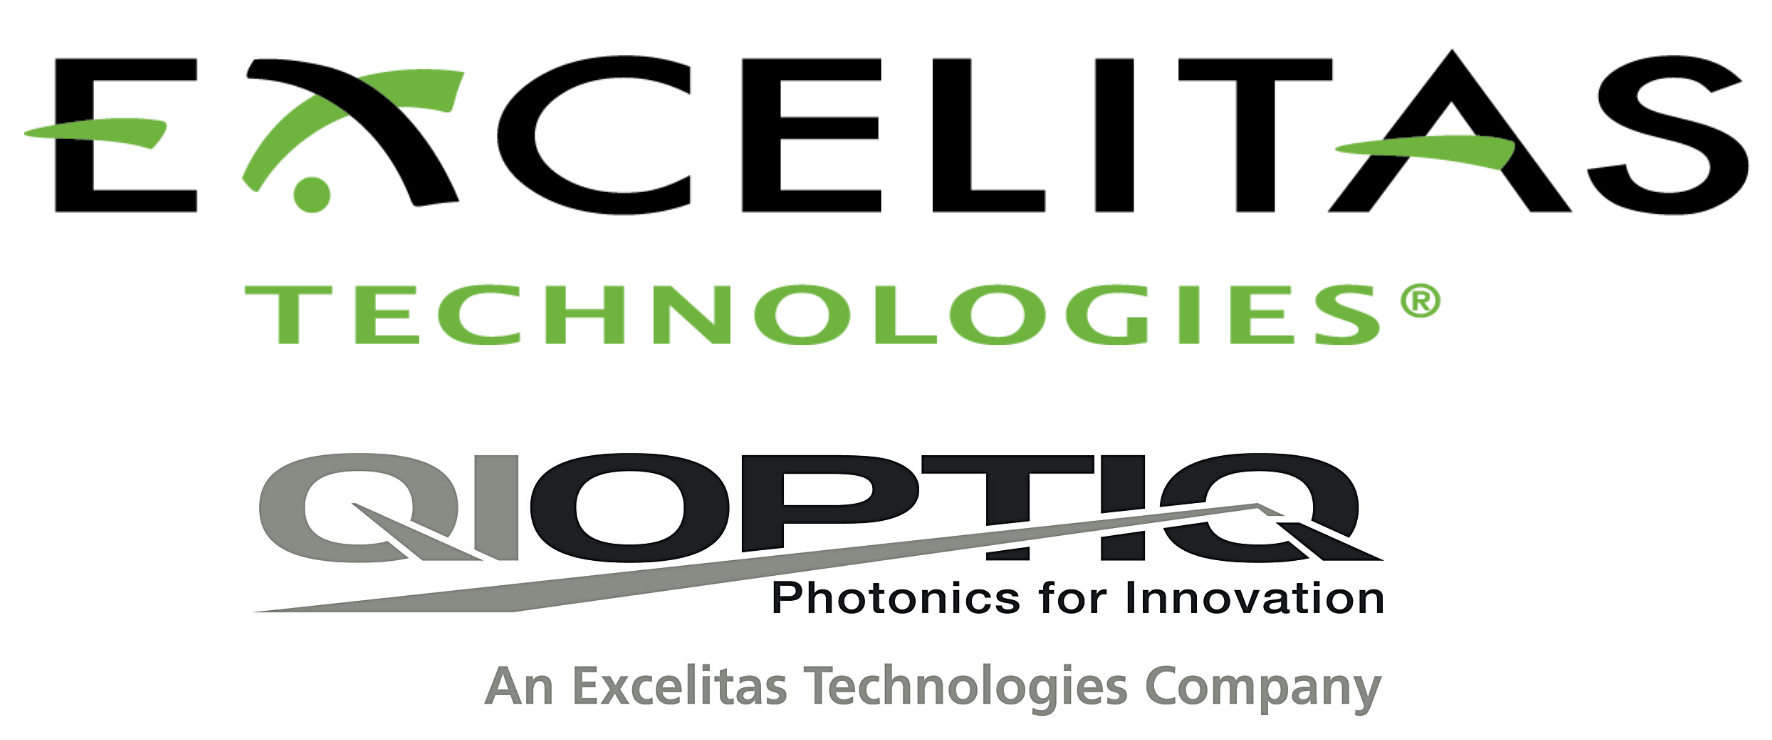 Qioptiq Photonics GmbH & Co. KG